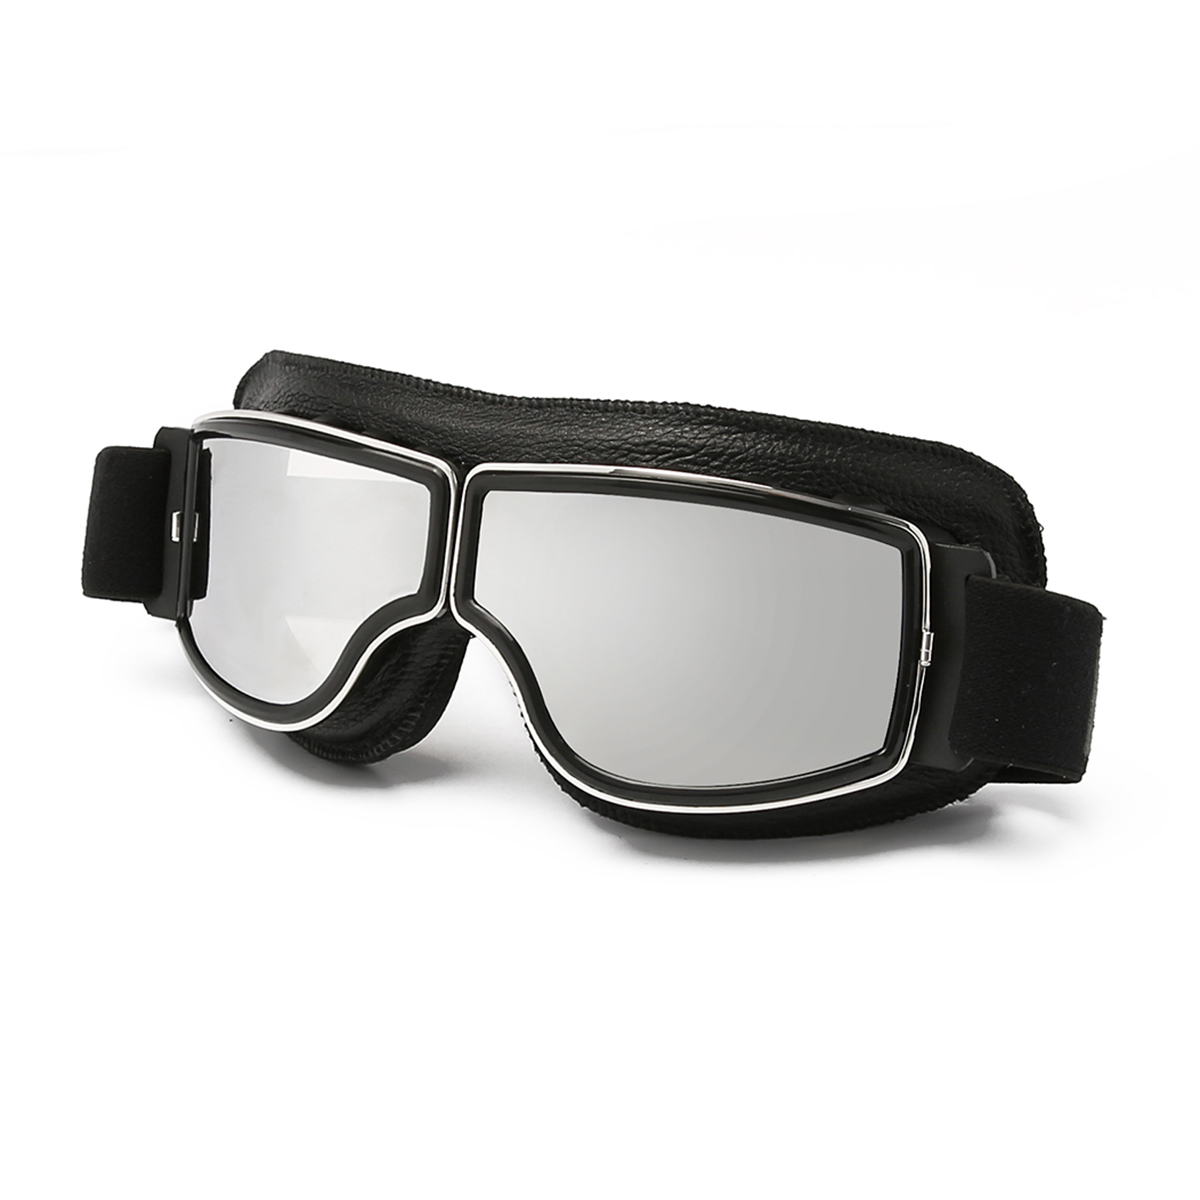 Comfortable Anti Slip Strap Anti Impact Vintage Motocross Goggles